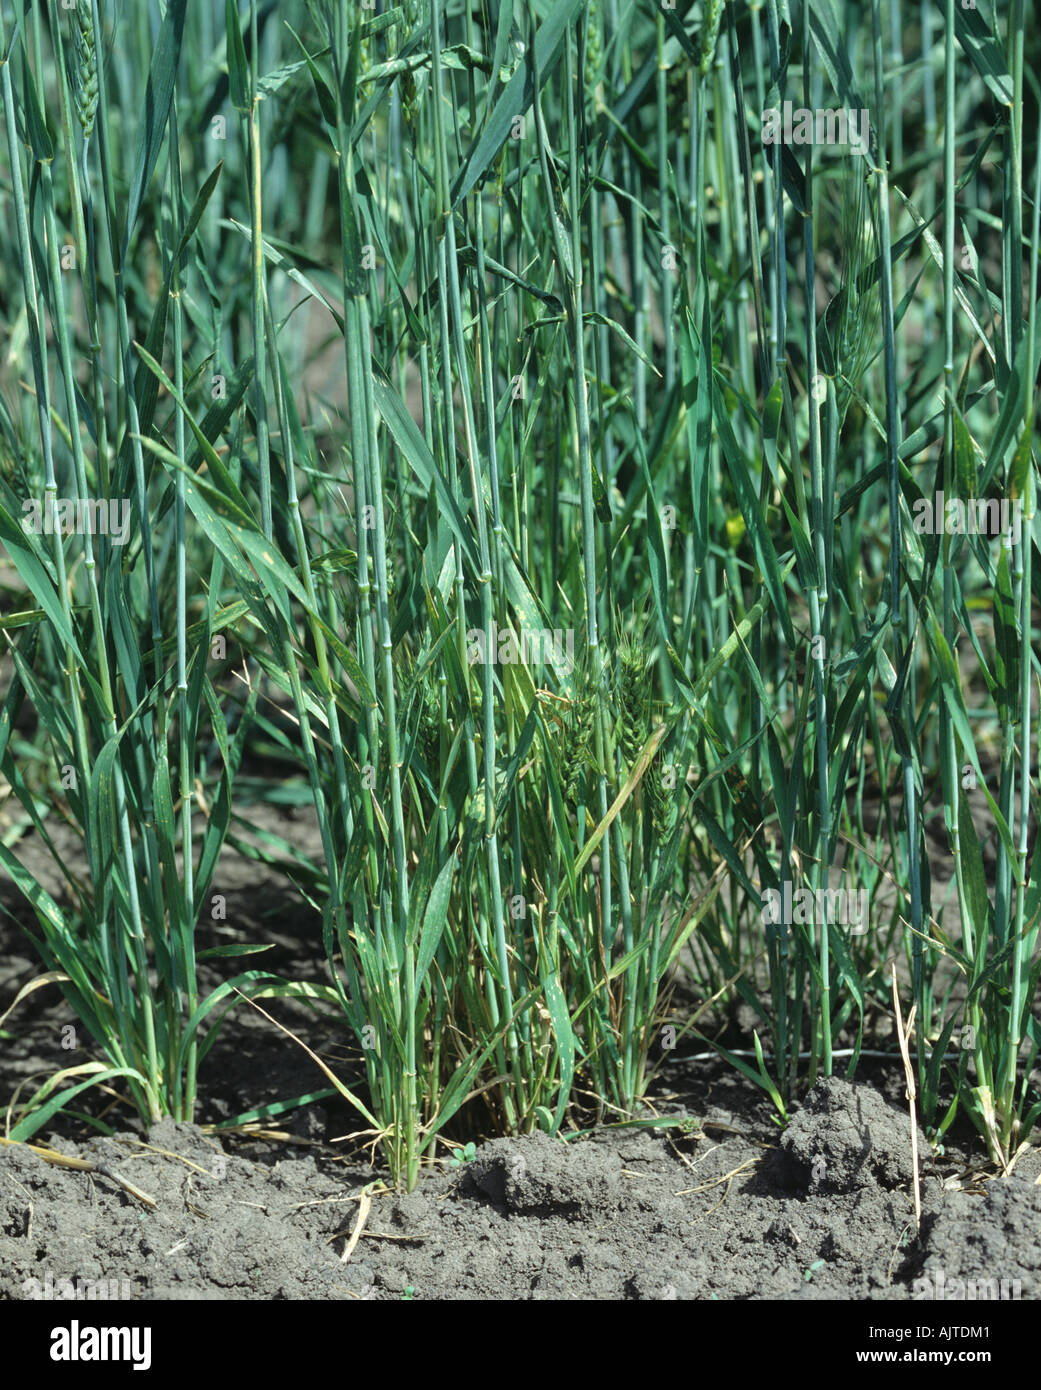 Dwarf bunt (Tilletia controversa) stunted plants in a wheat crop, Montana, USA Stock Photo